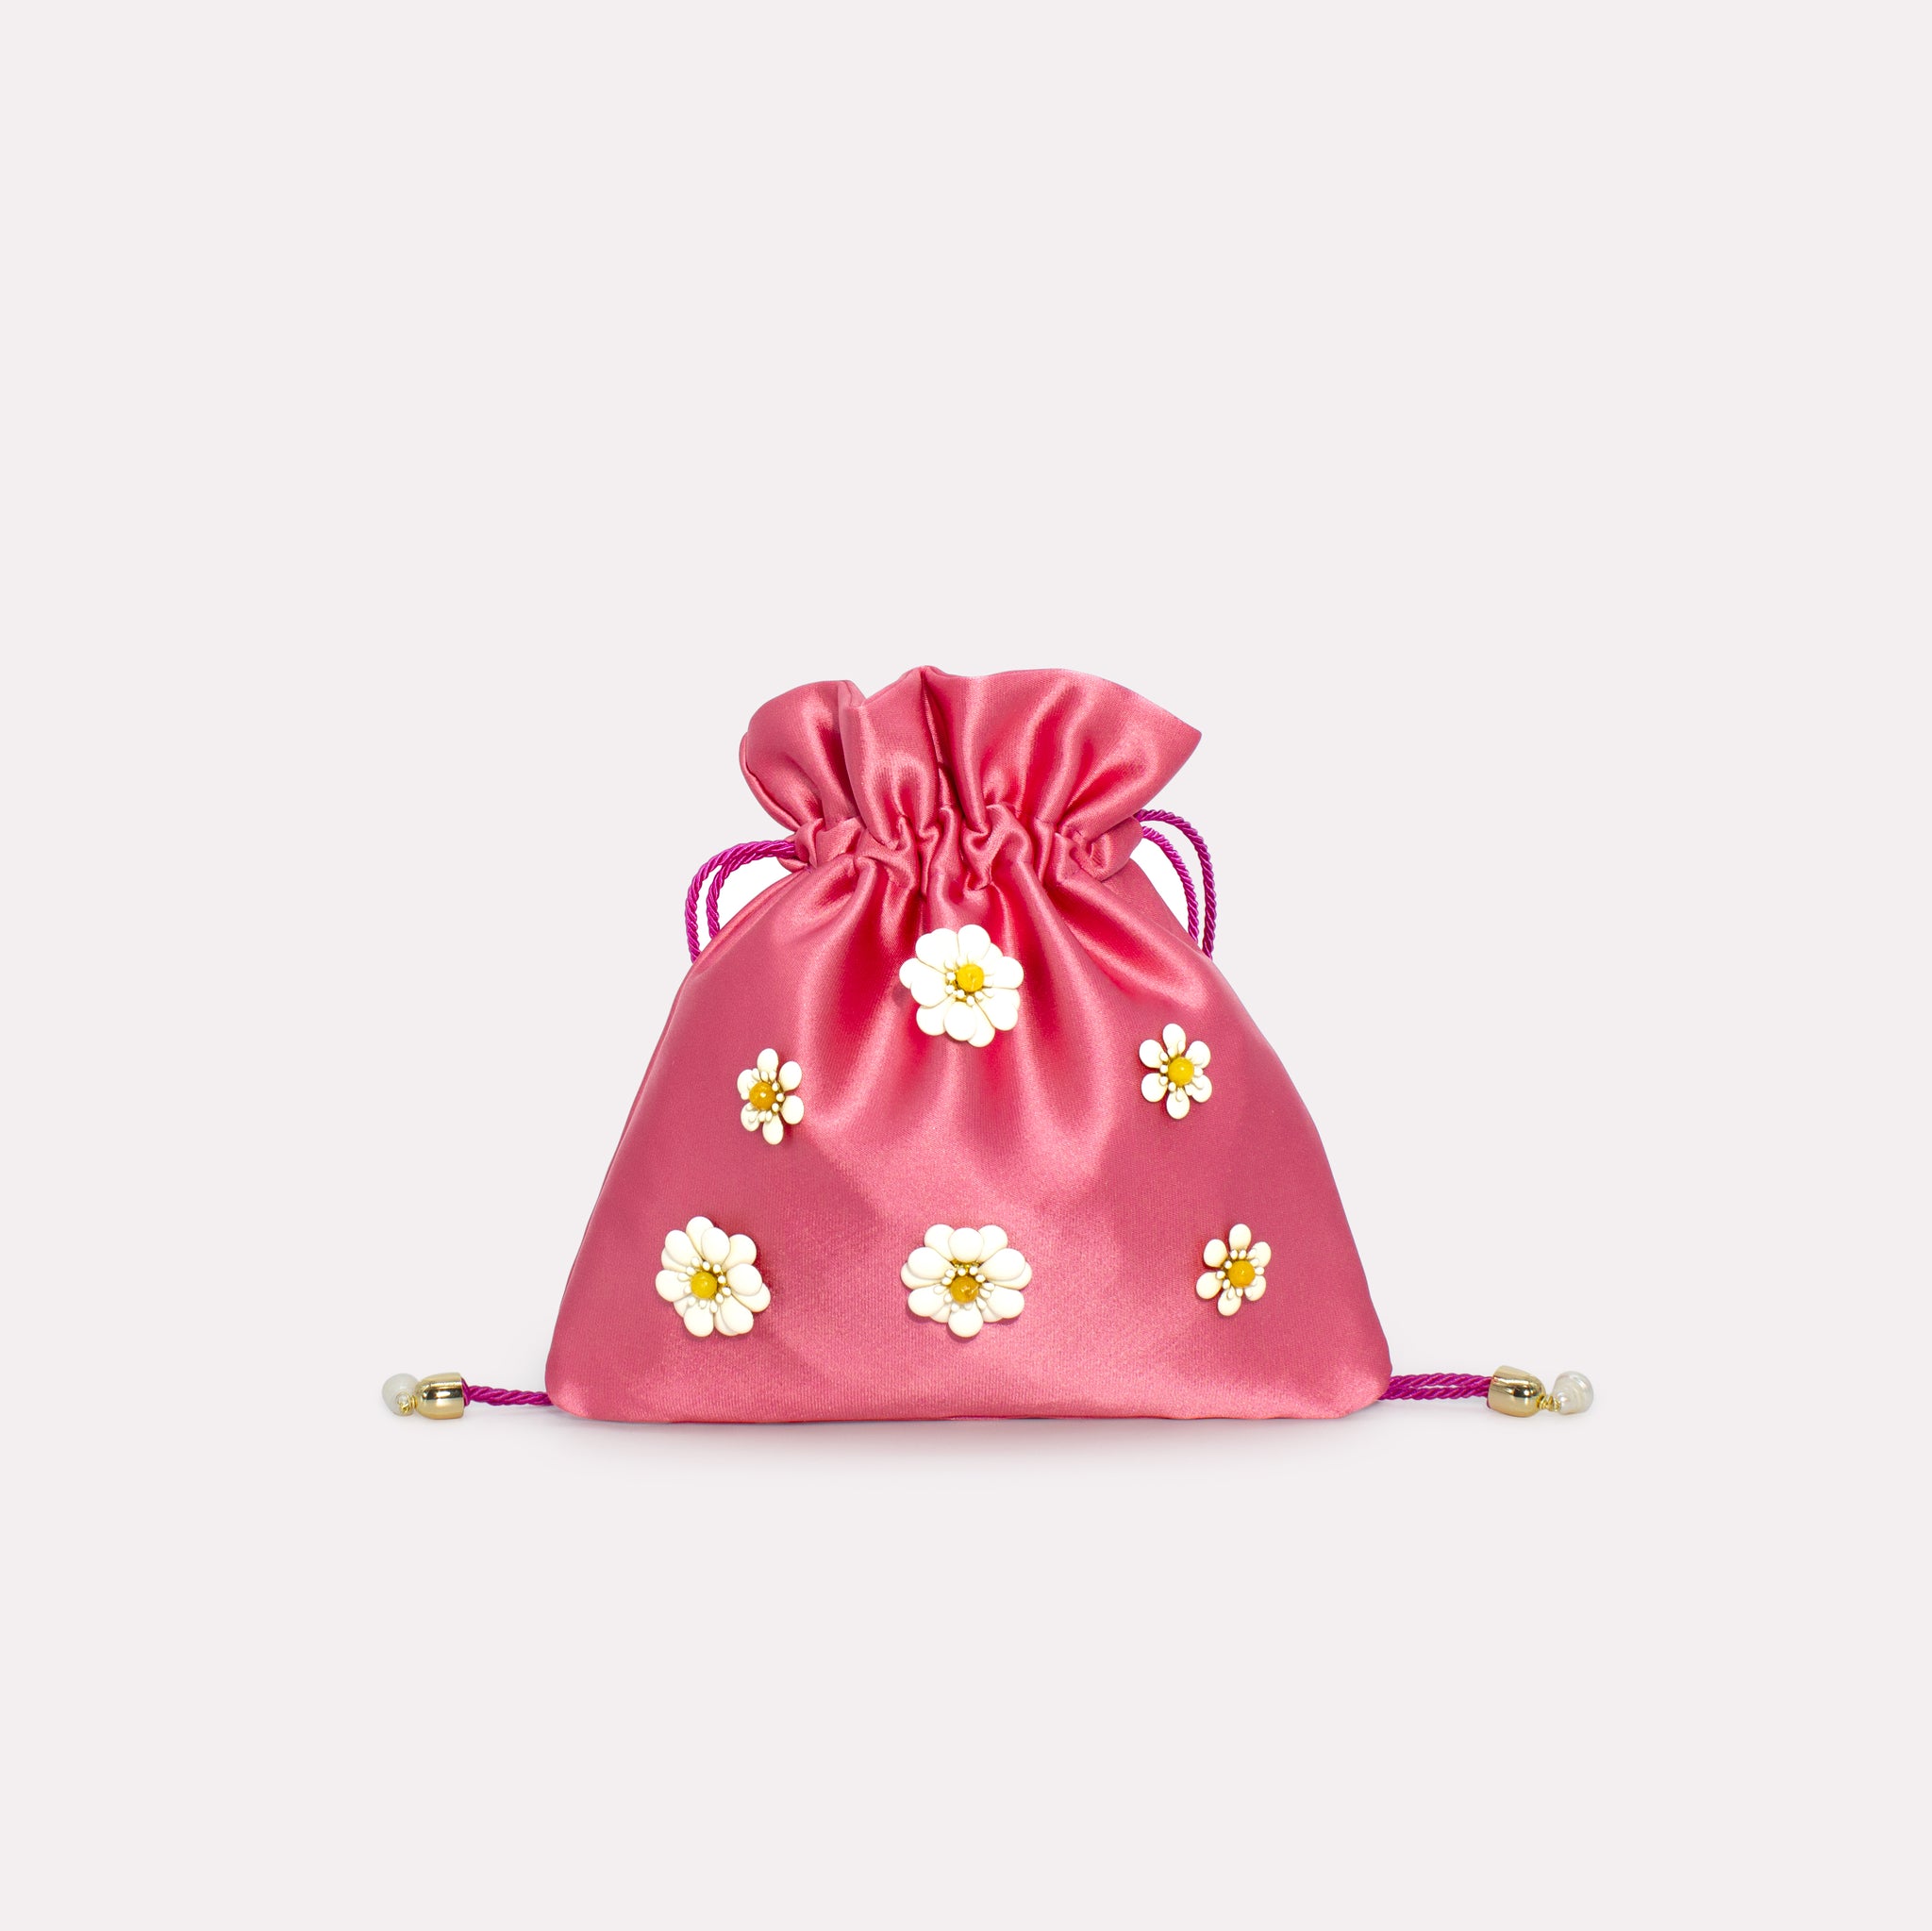 Daisy mini bag carolina in colorazione hot pink